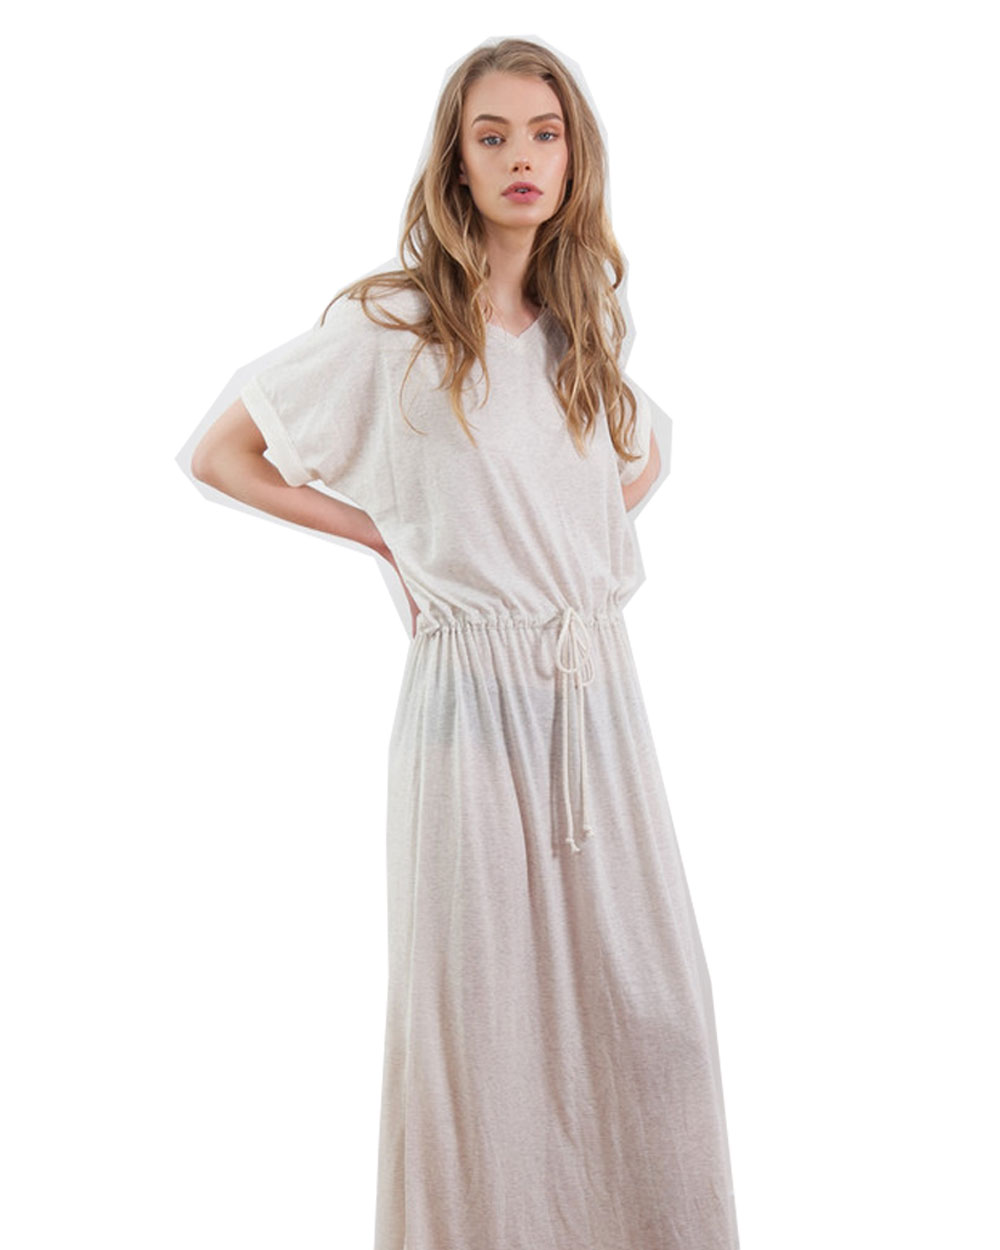 Staple + Cloth dress - $285